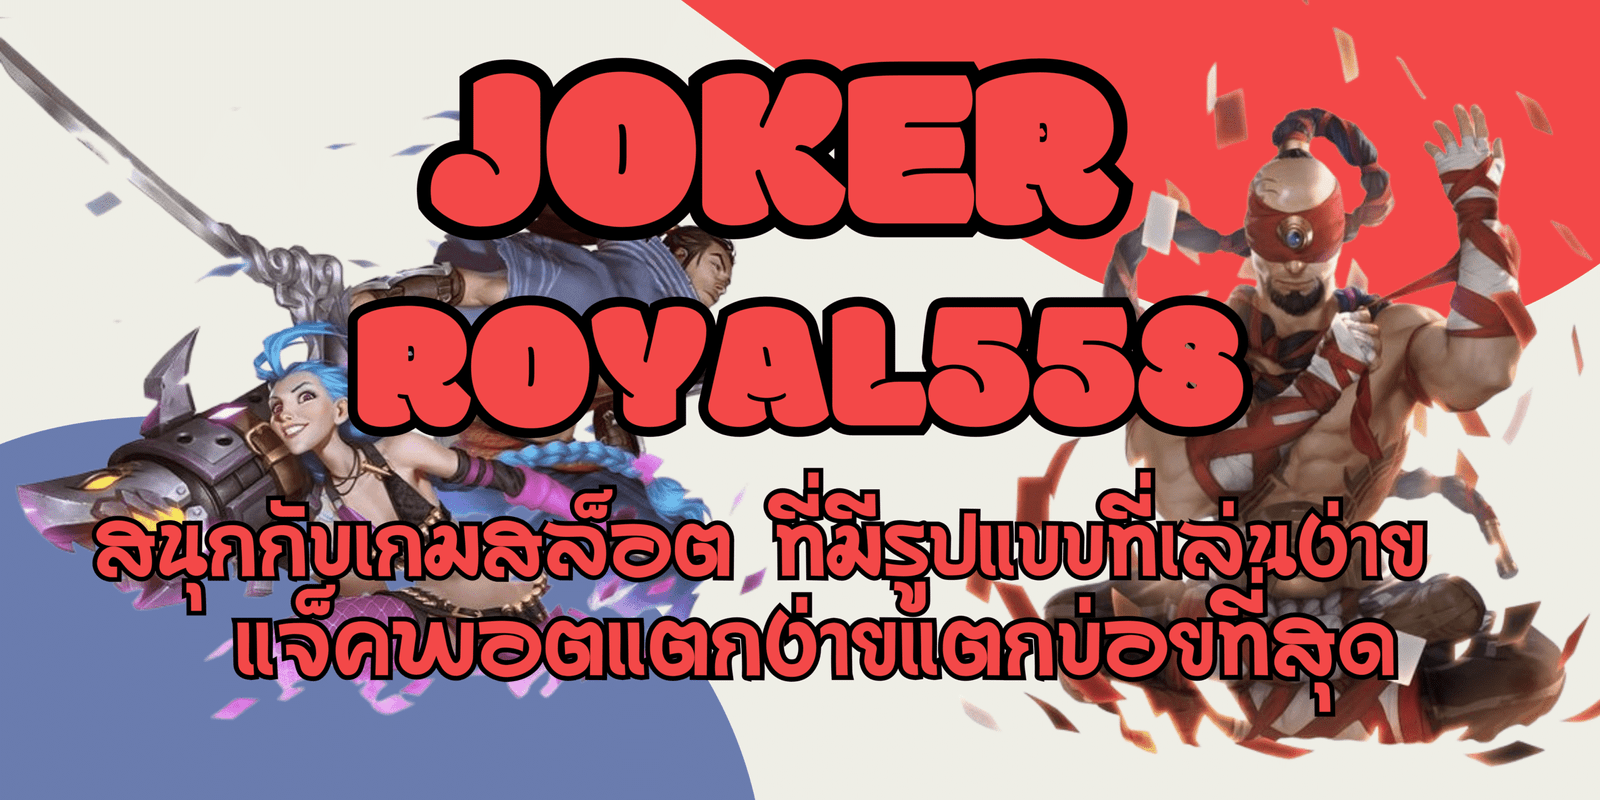 joker-royal558- สมัครสมาชิก